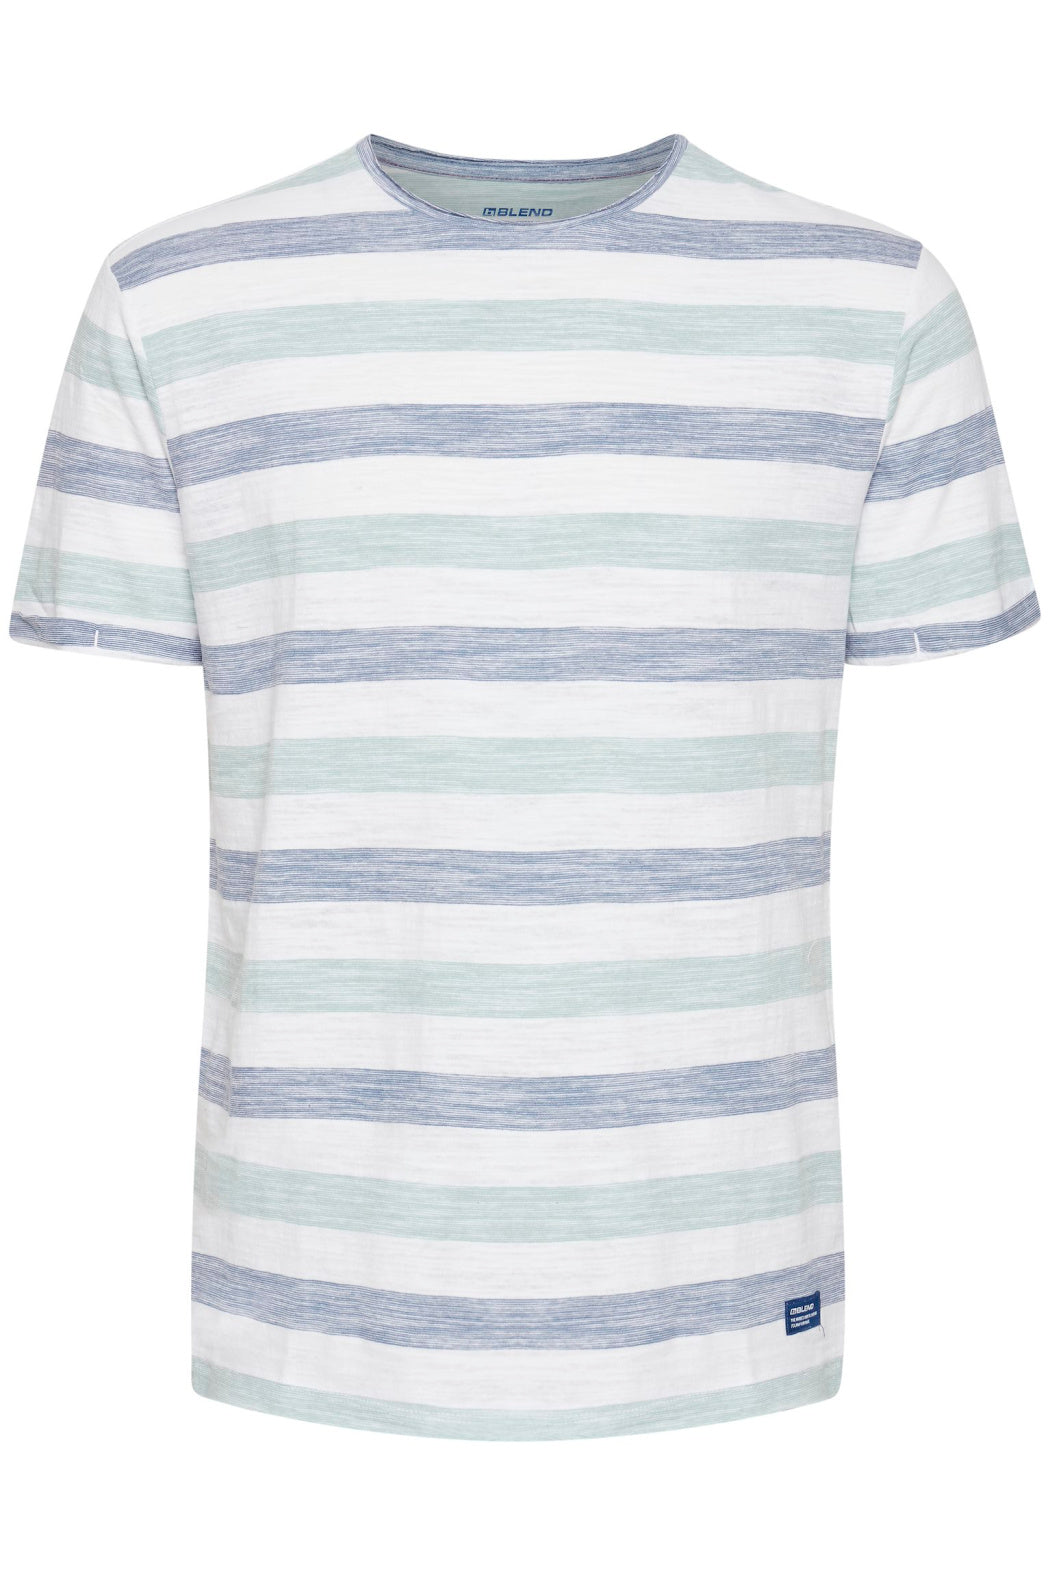 Blend Stripe T-Shirt